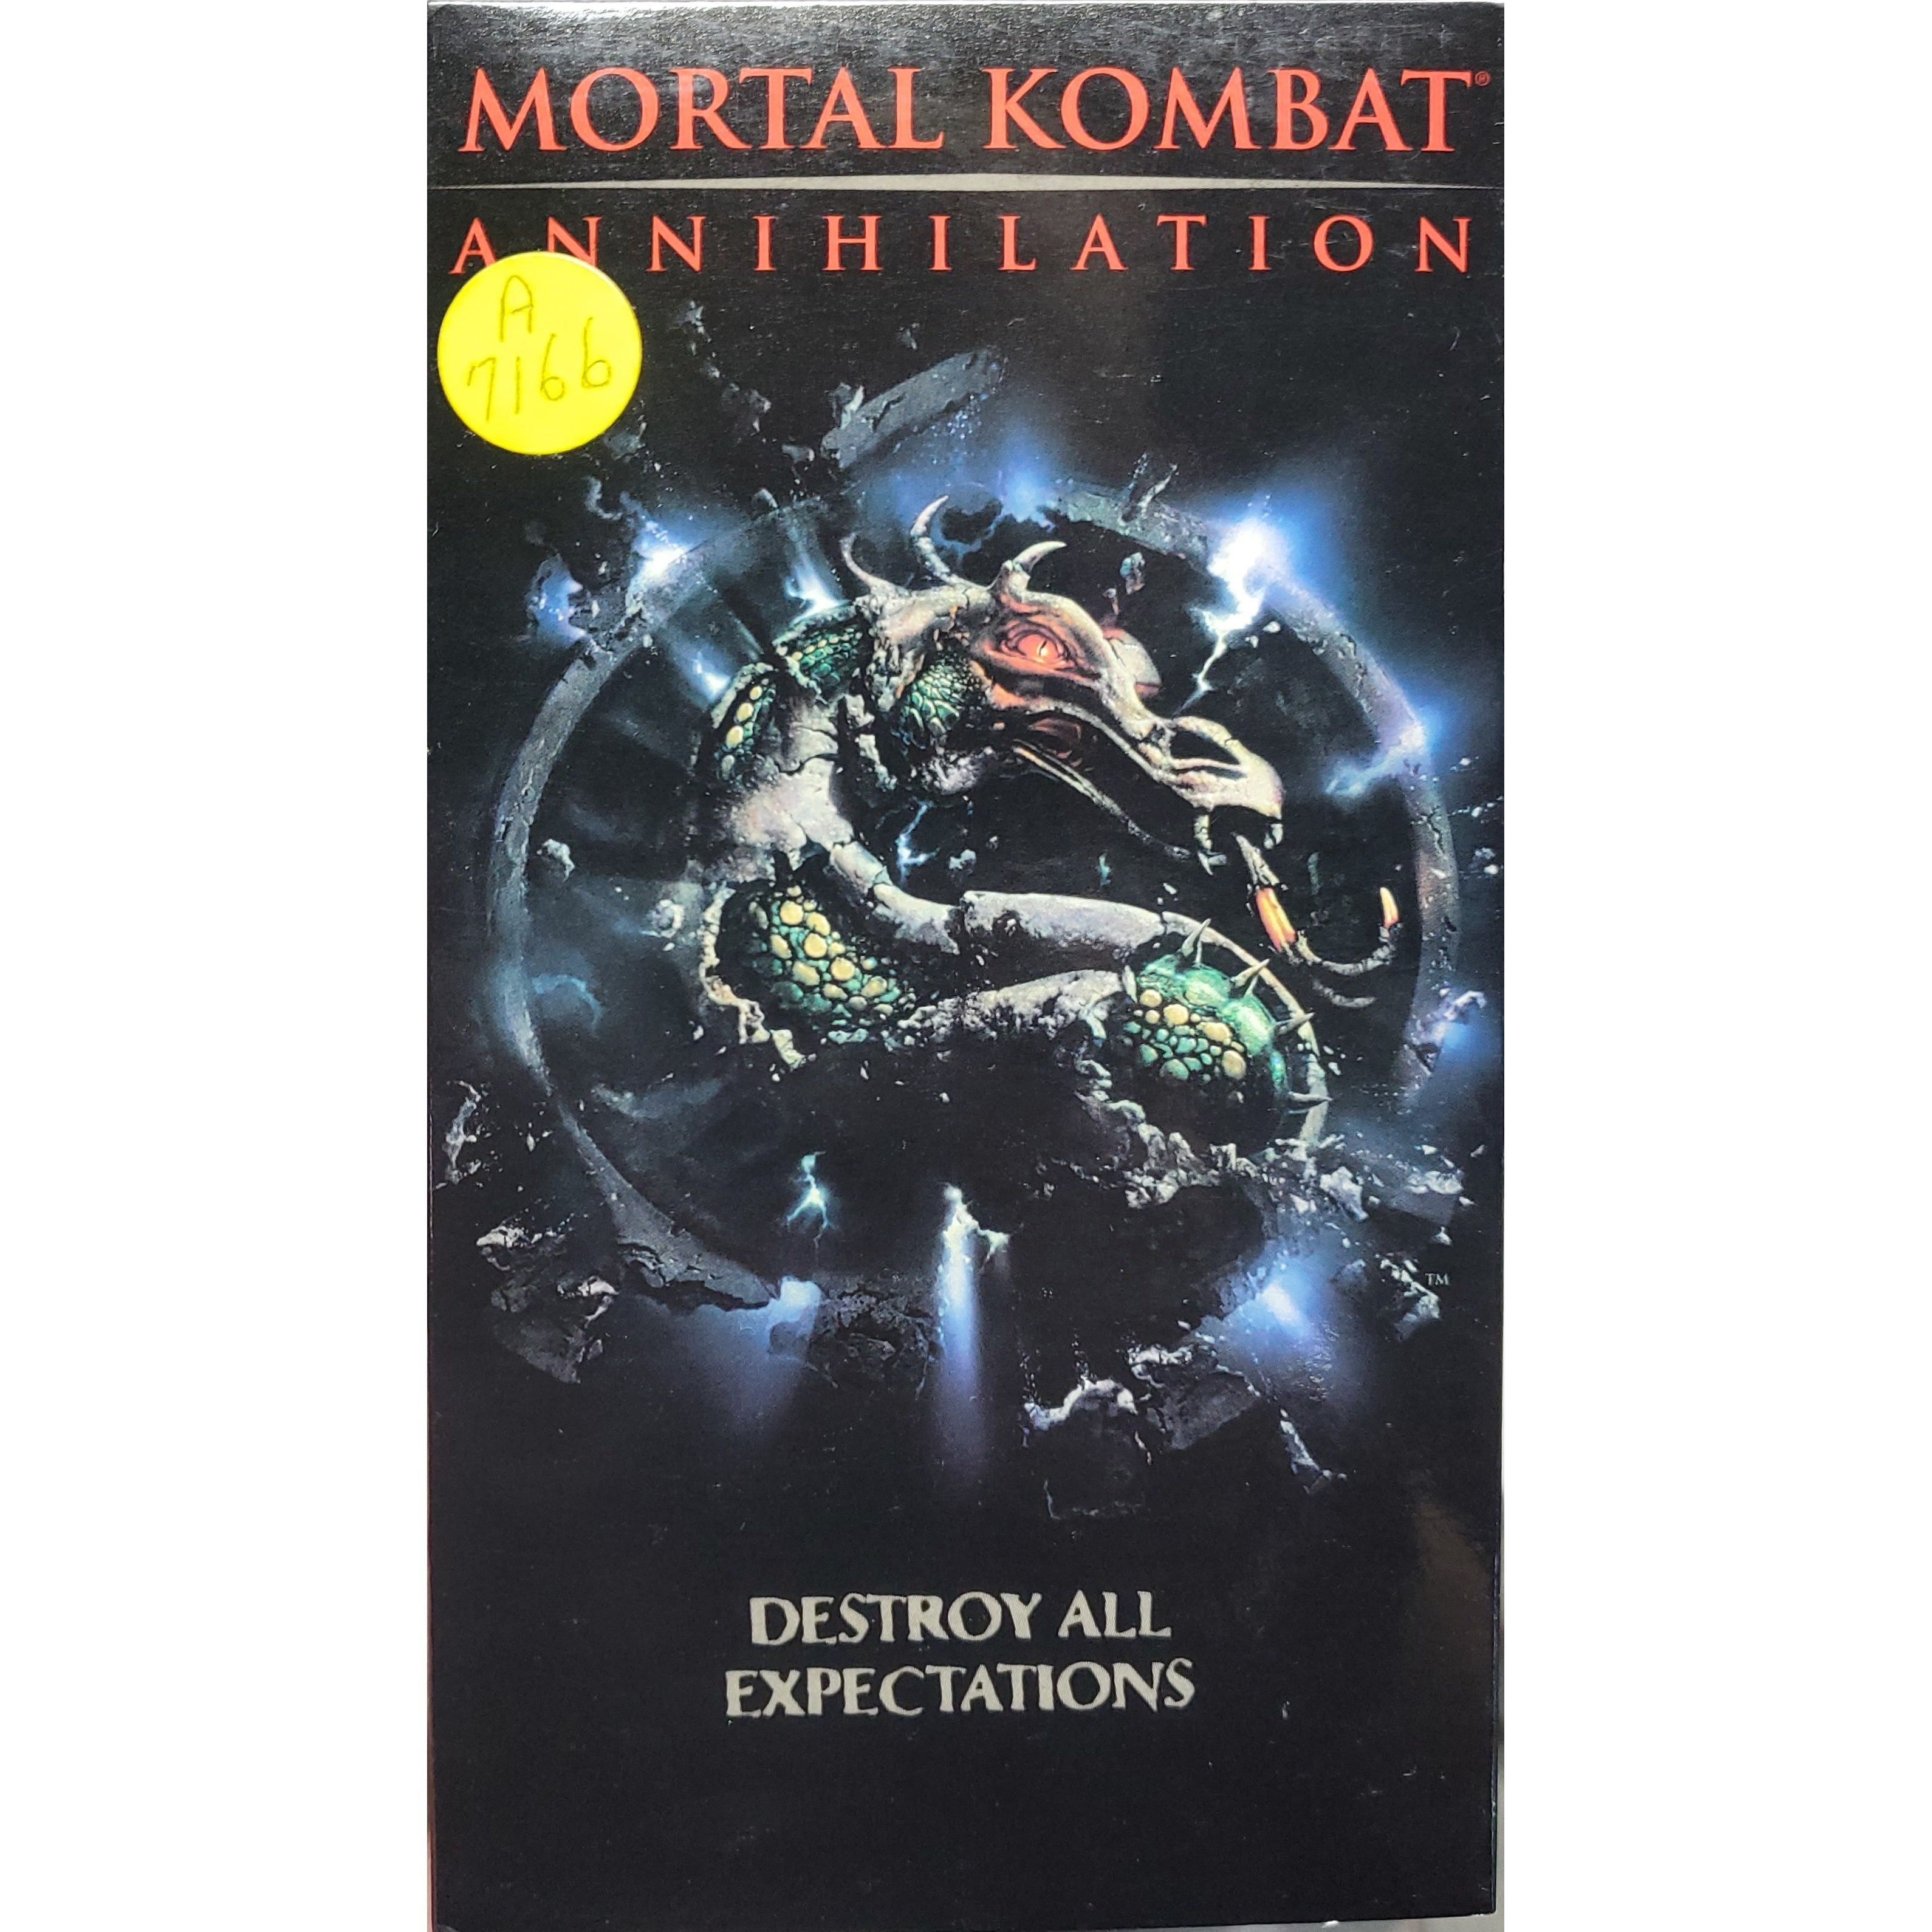 Mortal Kombat Annihilation VHS Tape